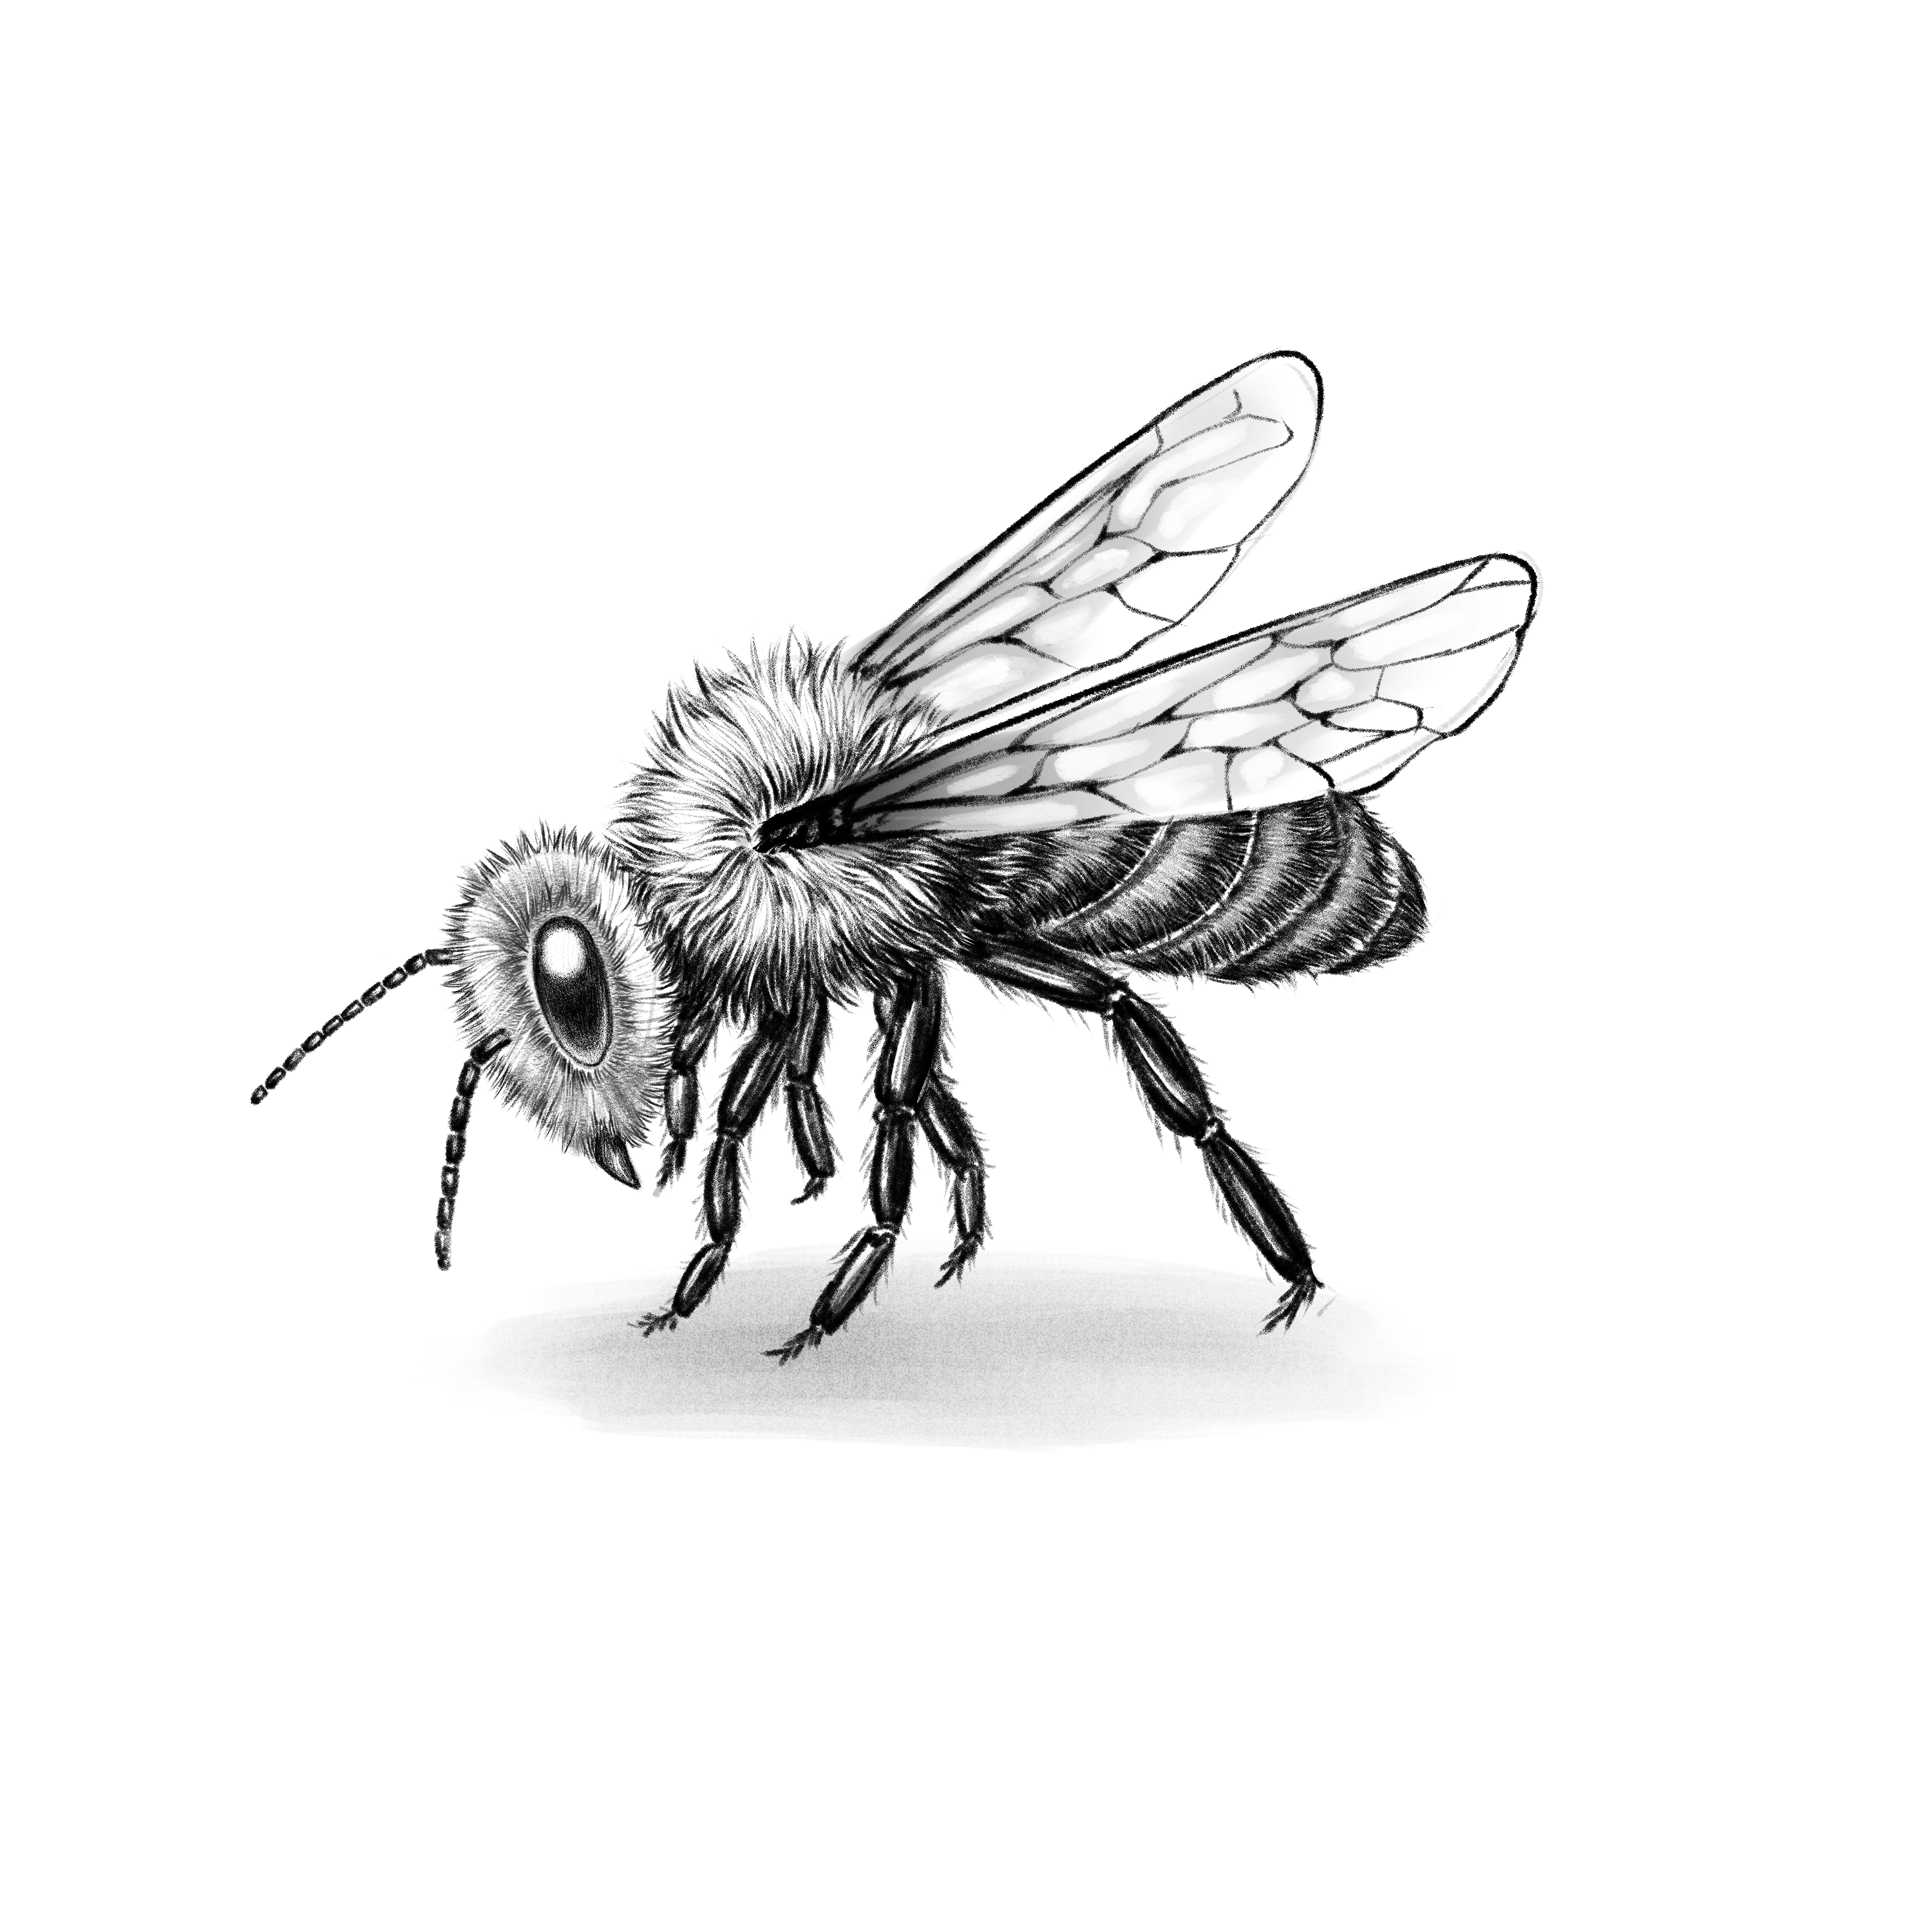 76901 Bee Drawing Images Stock Photos  Vectors  Shutterstock